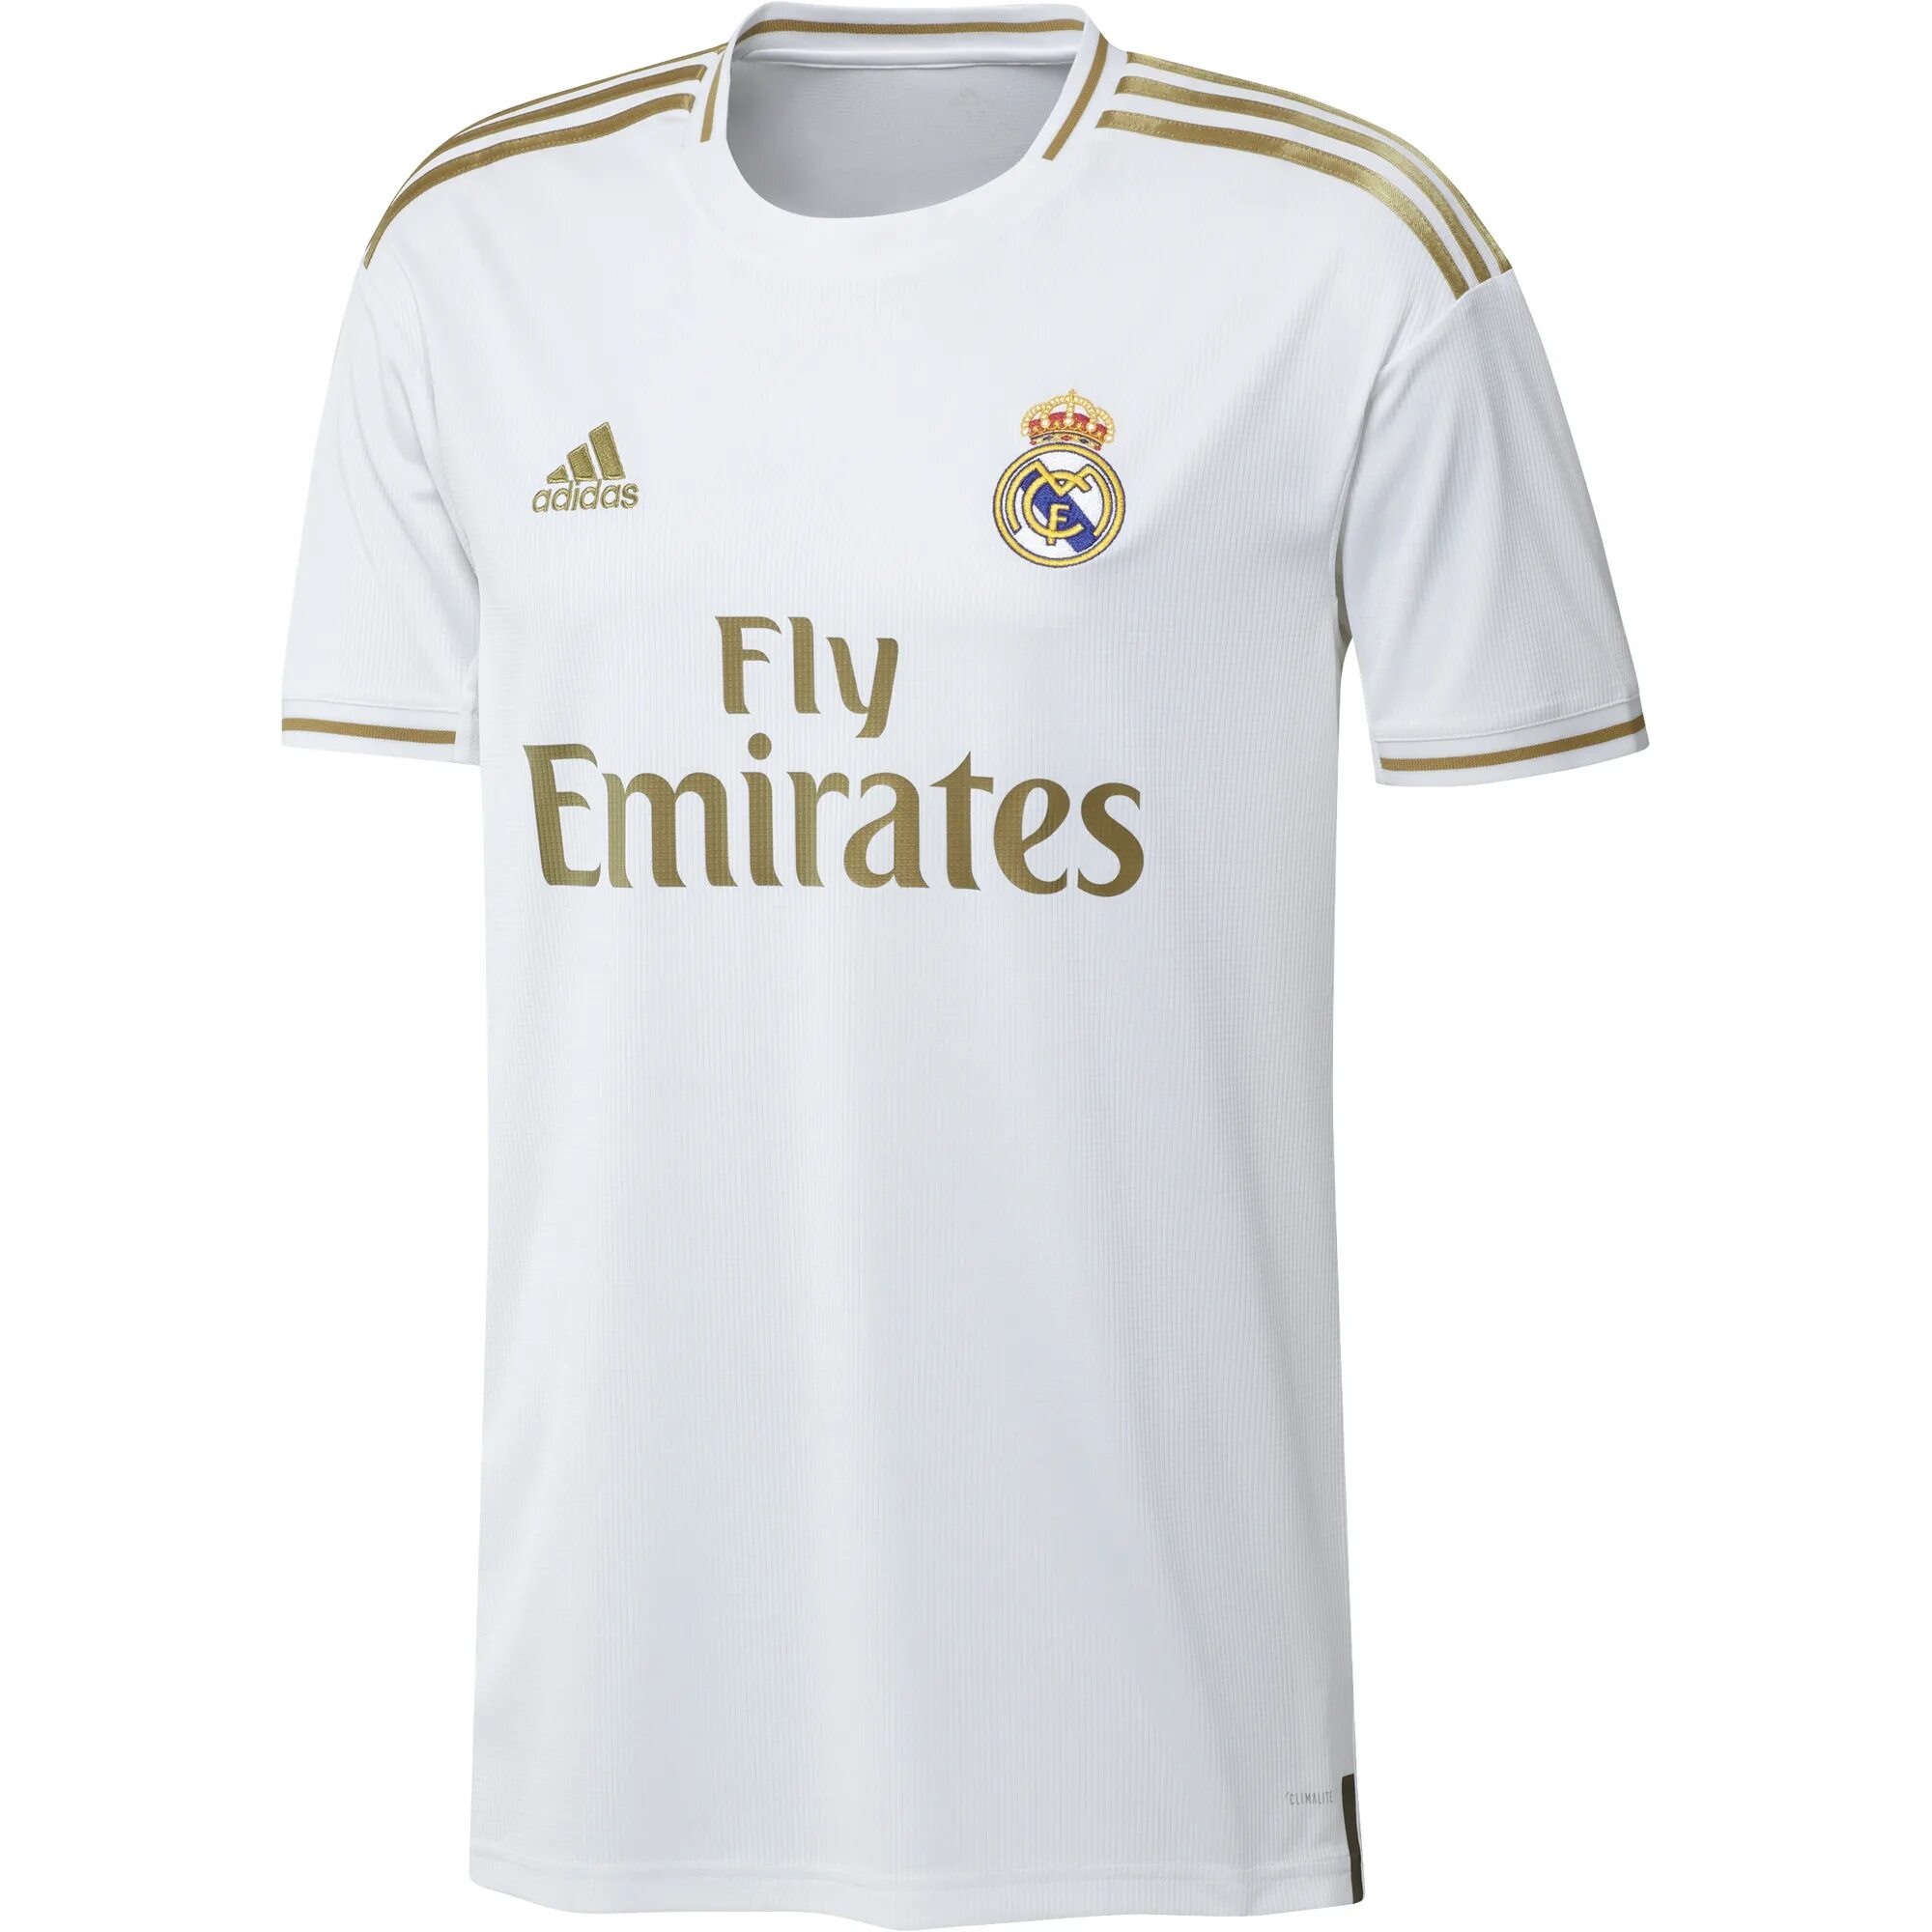 Реал Мадрид футболка оригинал. Реал Мадрид Jersey. Fly Emirates футболка Реал Мадрид. Футболка adidas real Madrid.